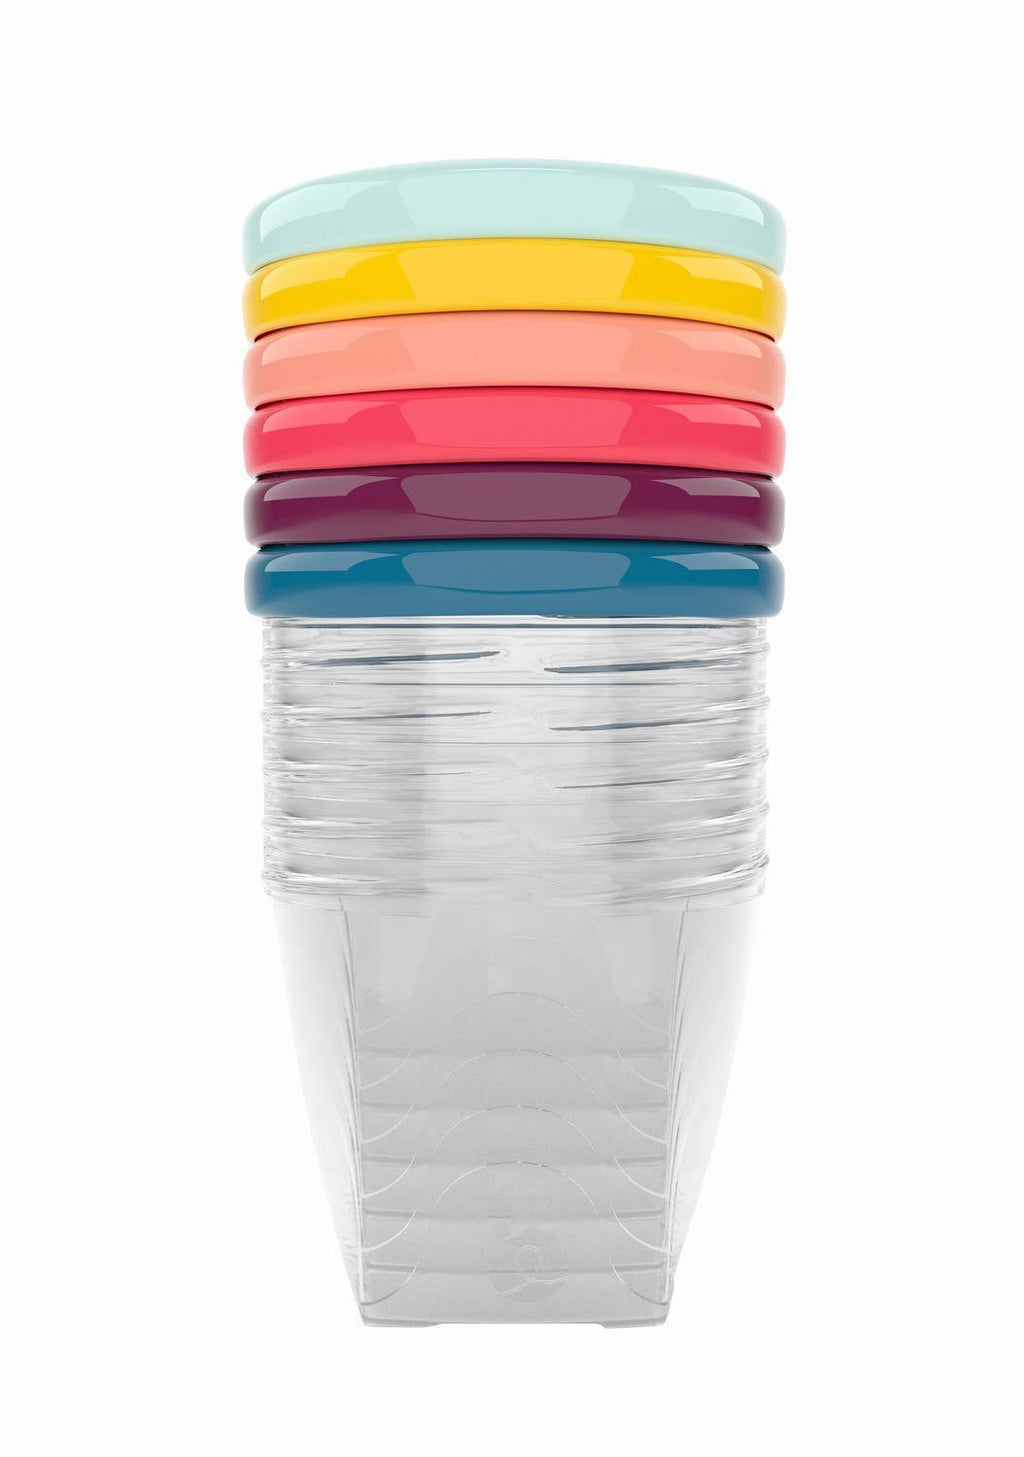 Babymoov Leak Proof Storage Bowls | BPA Free Containers